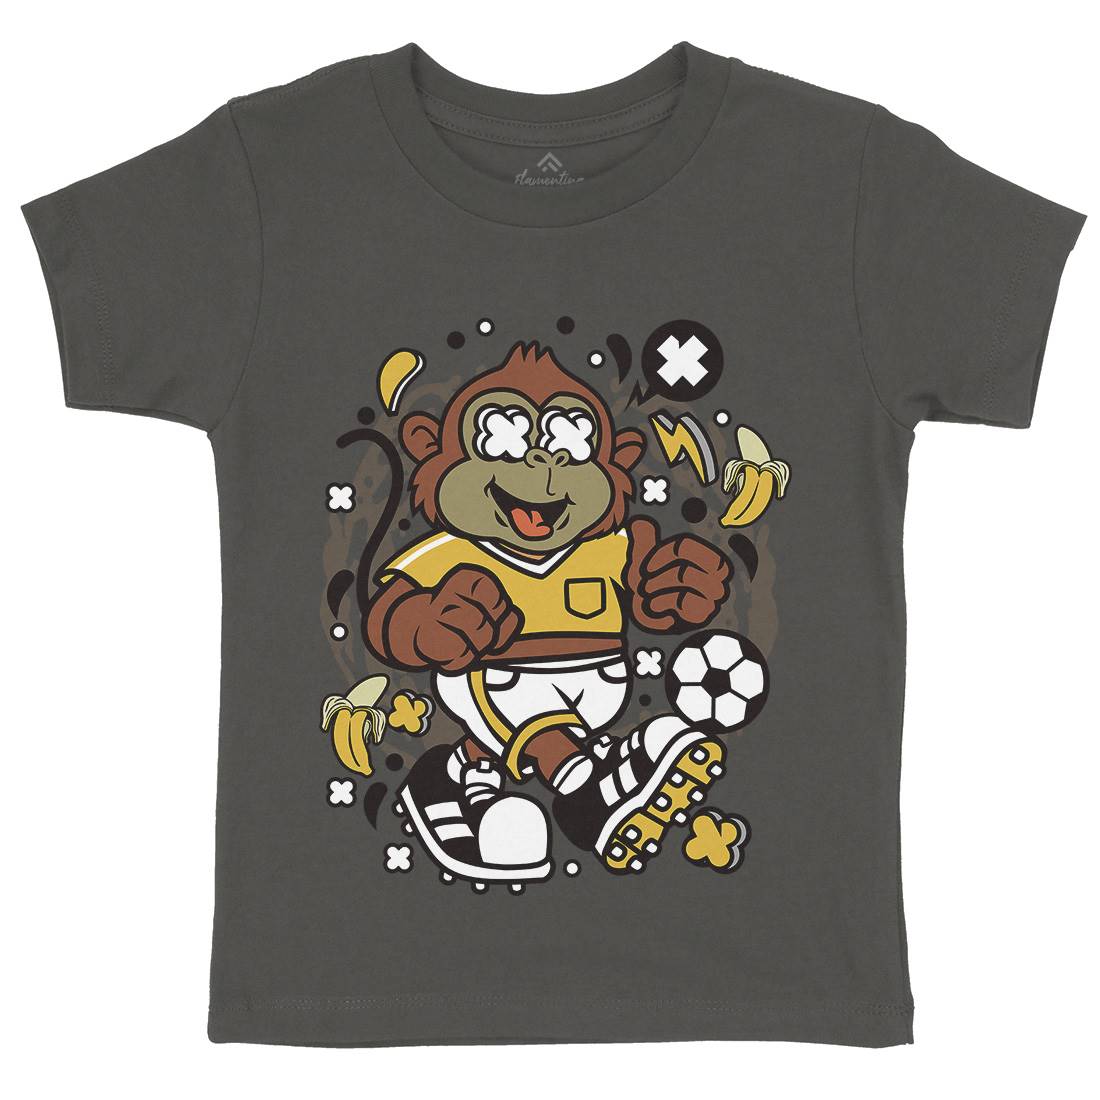 Soccer Monkey Kids Crew Neck T-Shirt Sport C662